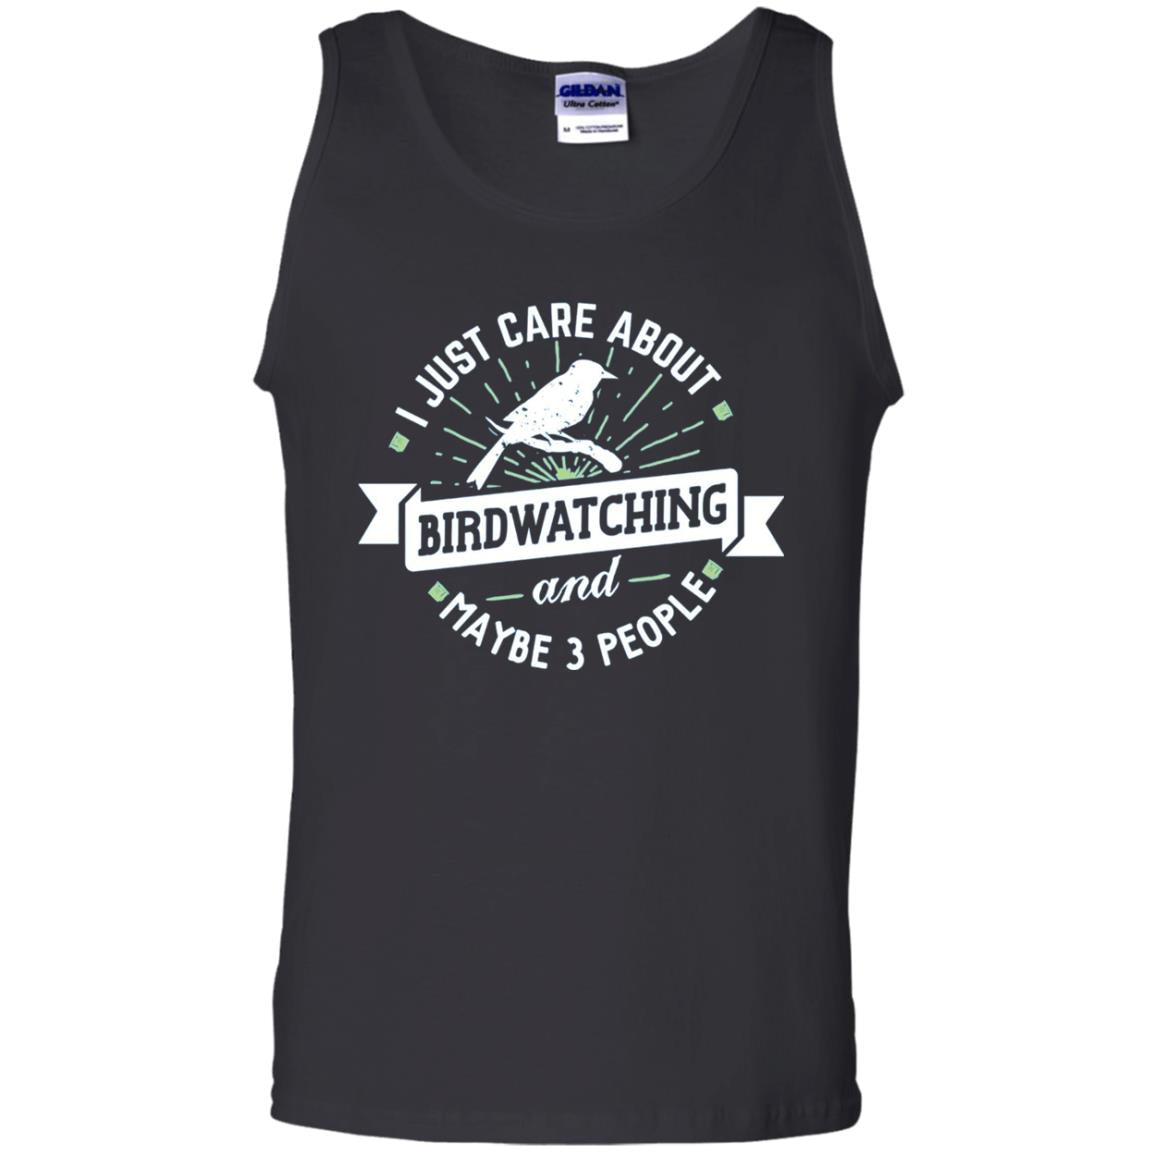 Birdwatching T-shirt I Just Care About Birdwatching